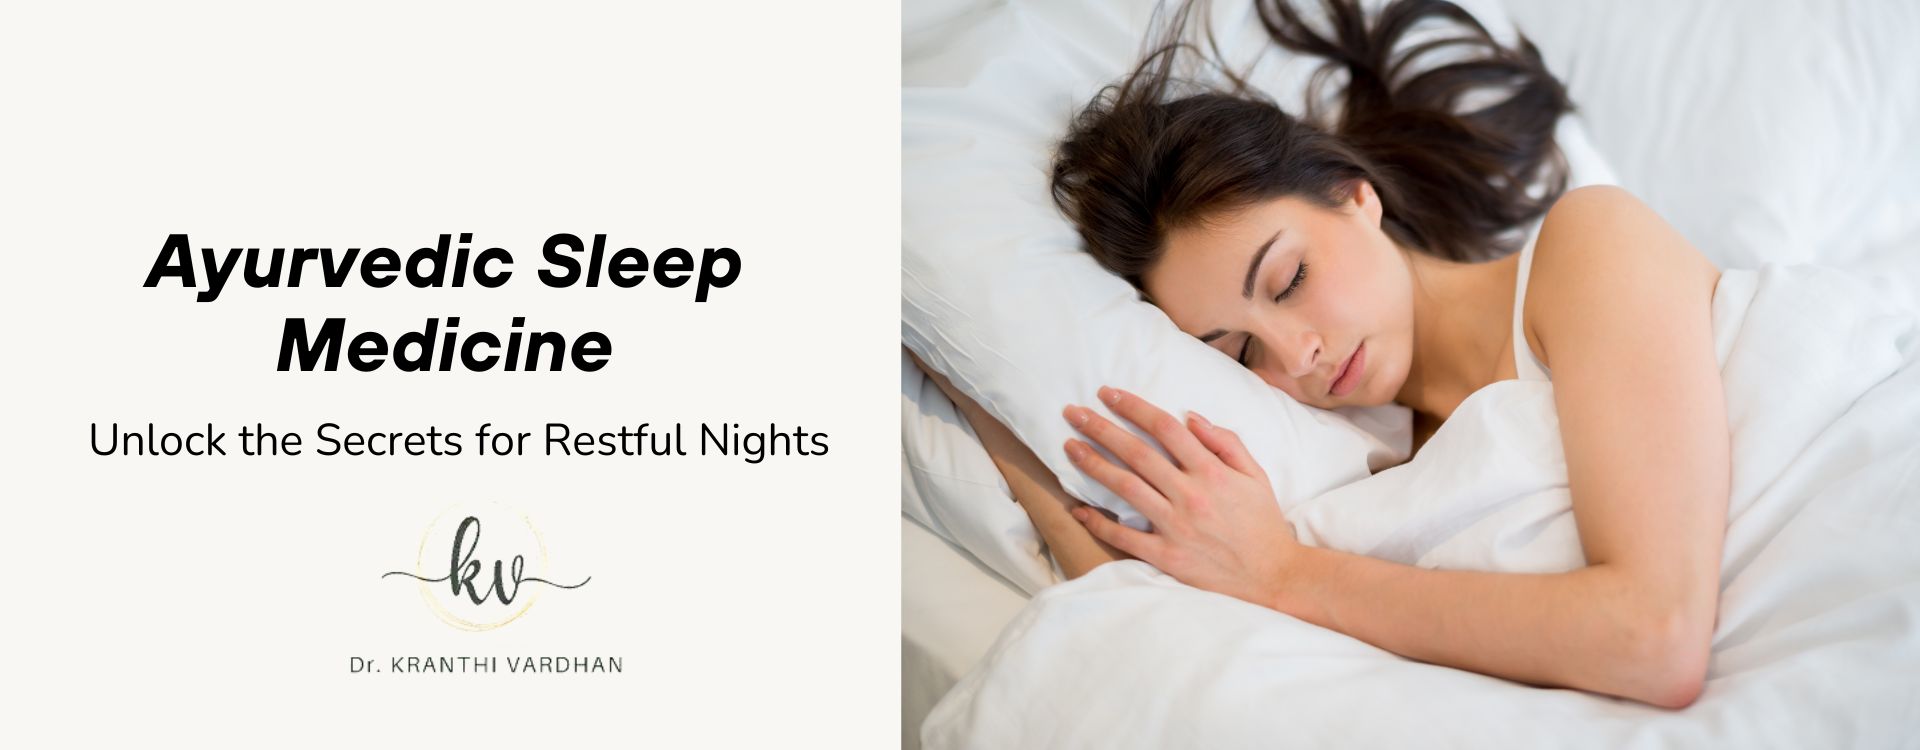 Ayurvedic Sleep Medicine: Unlock the Secrets for Restful Nights